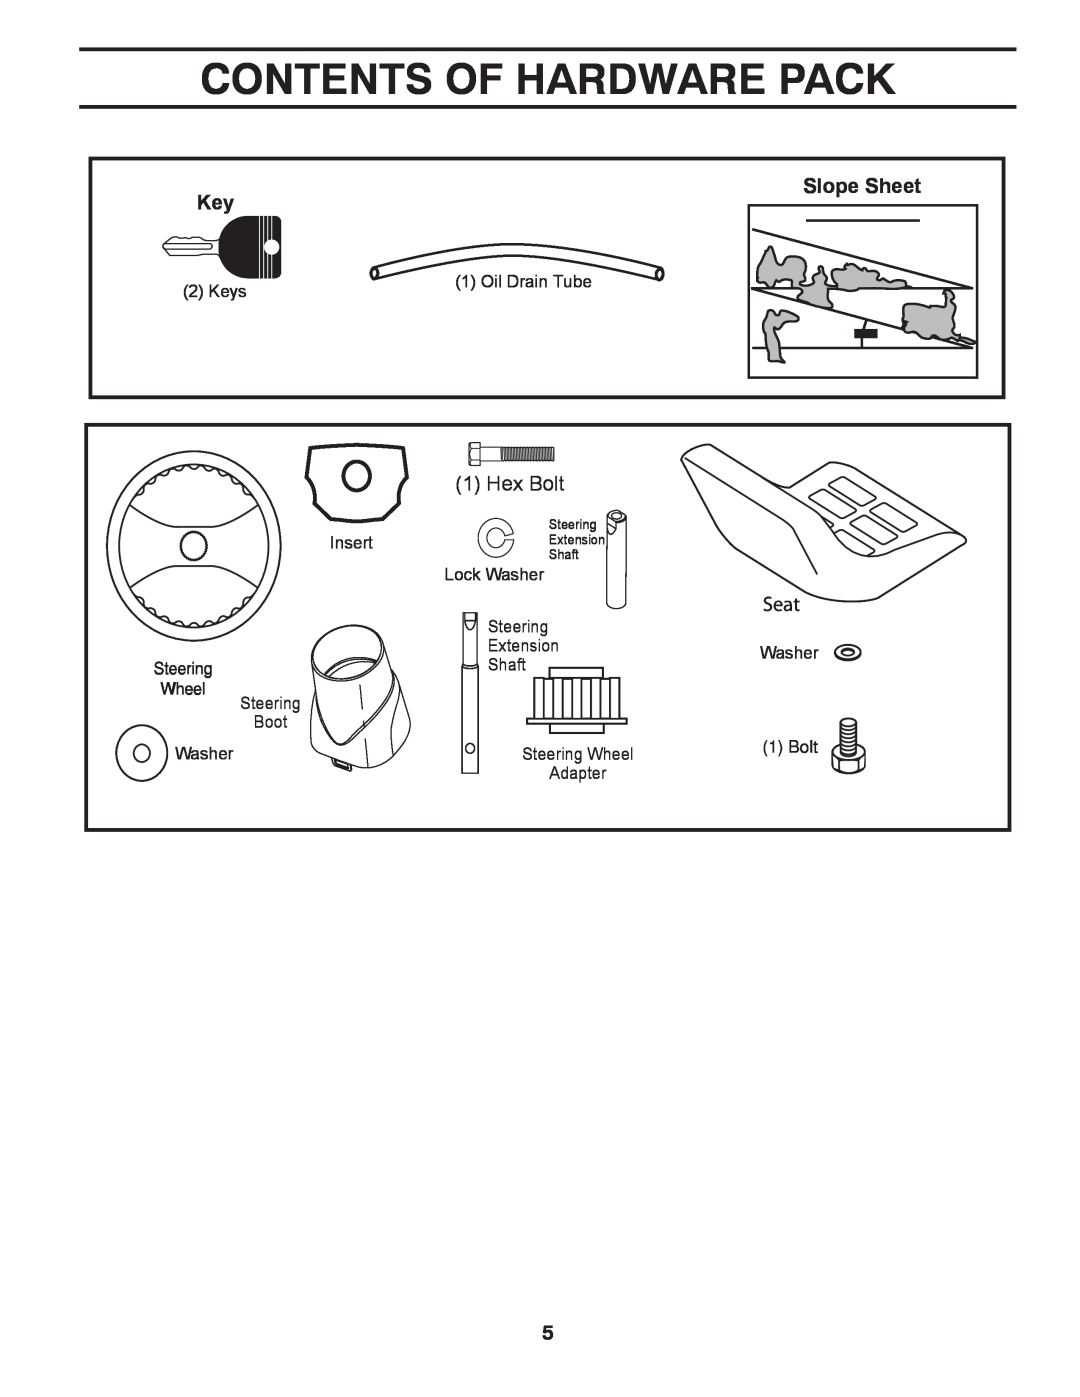 Poulan pb19546lt manual Contents Of Hardware Pack, Slope Sheet, Hex Bolt, Seat 